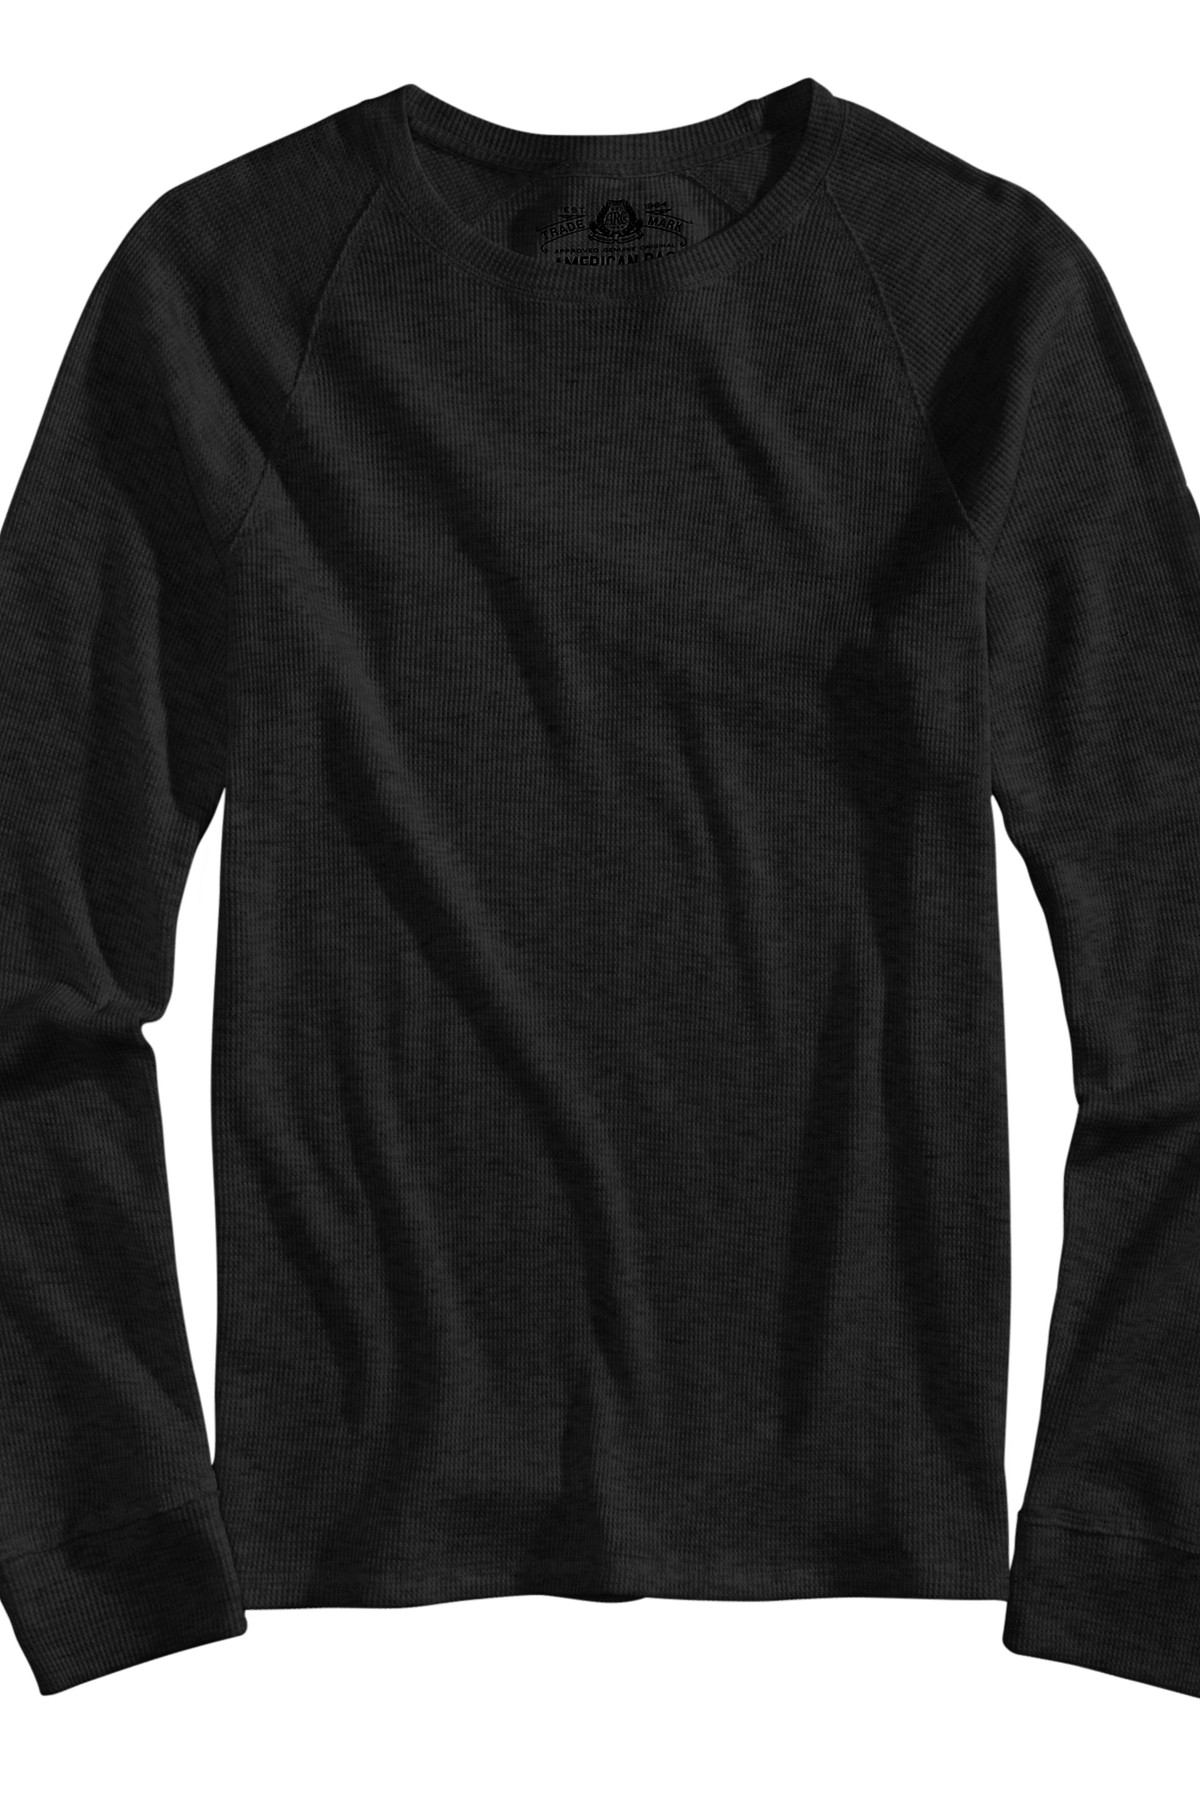 American Rag Black Thermal-Knit Raglan-Sleeve T-Shirt